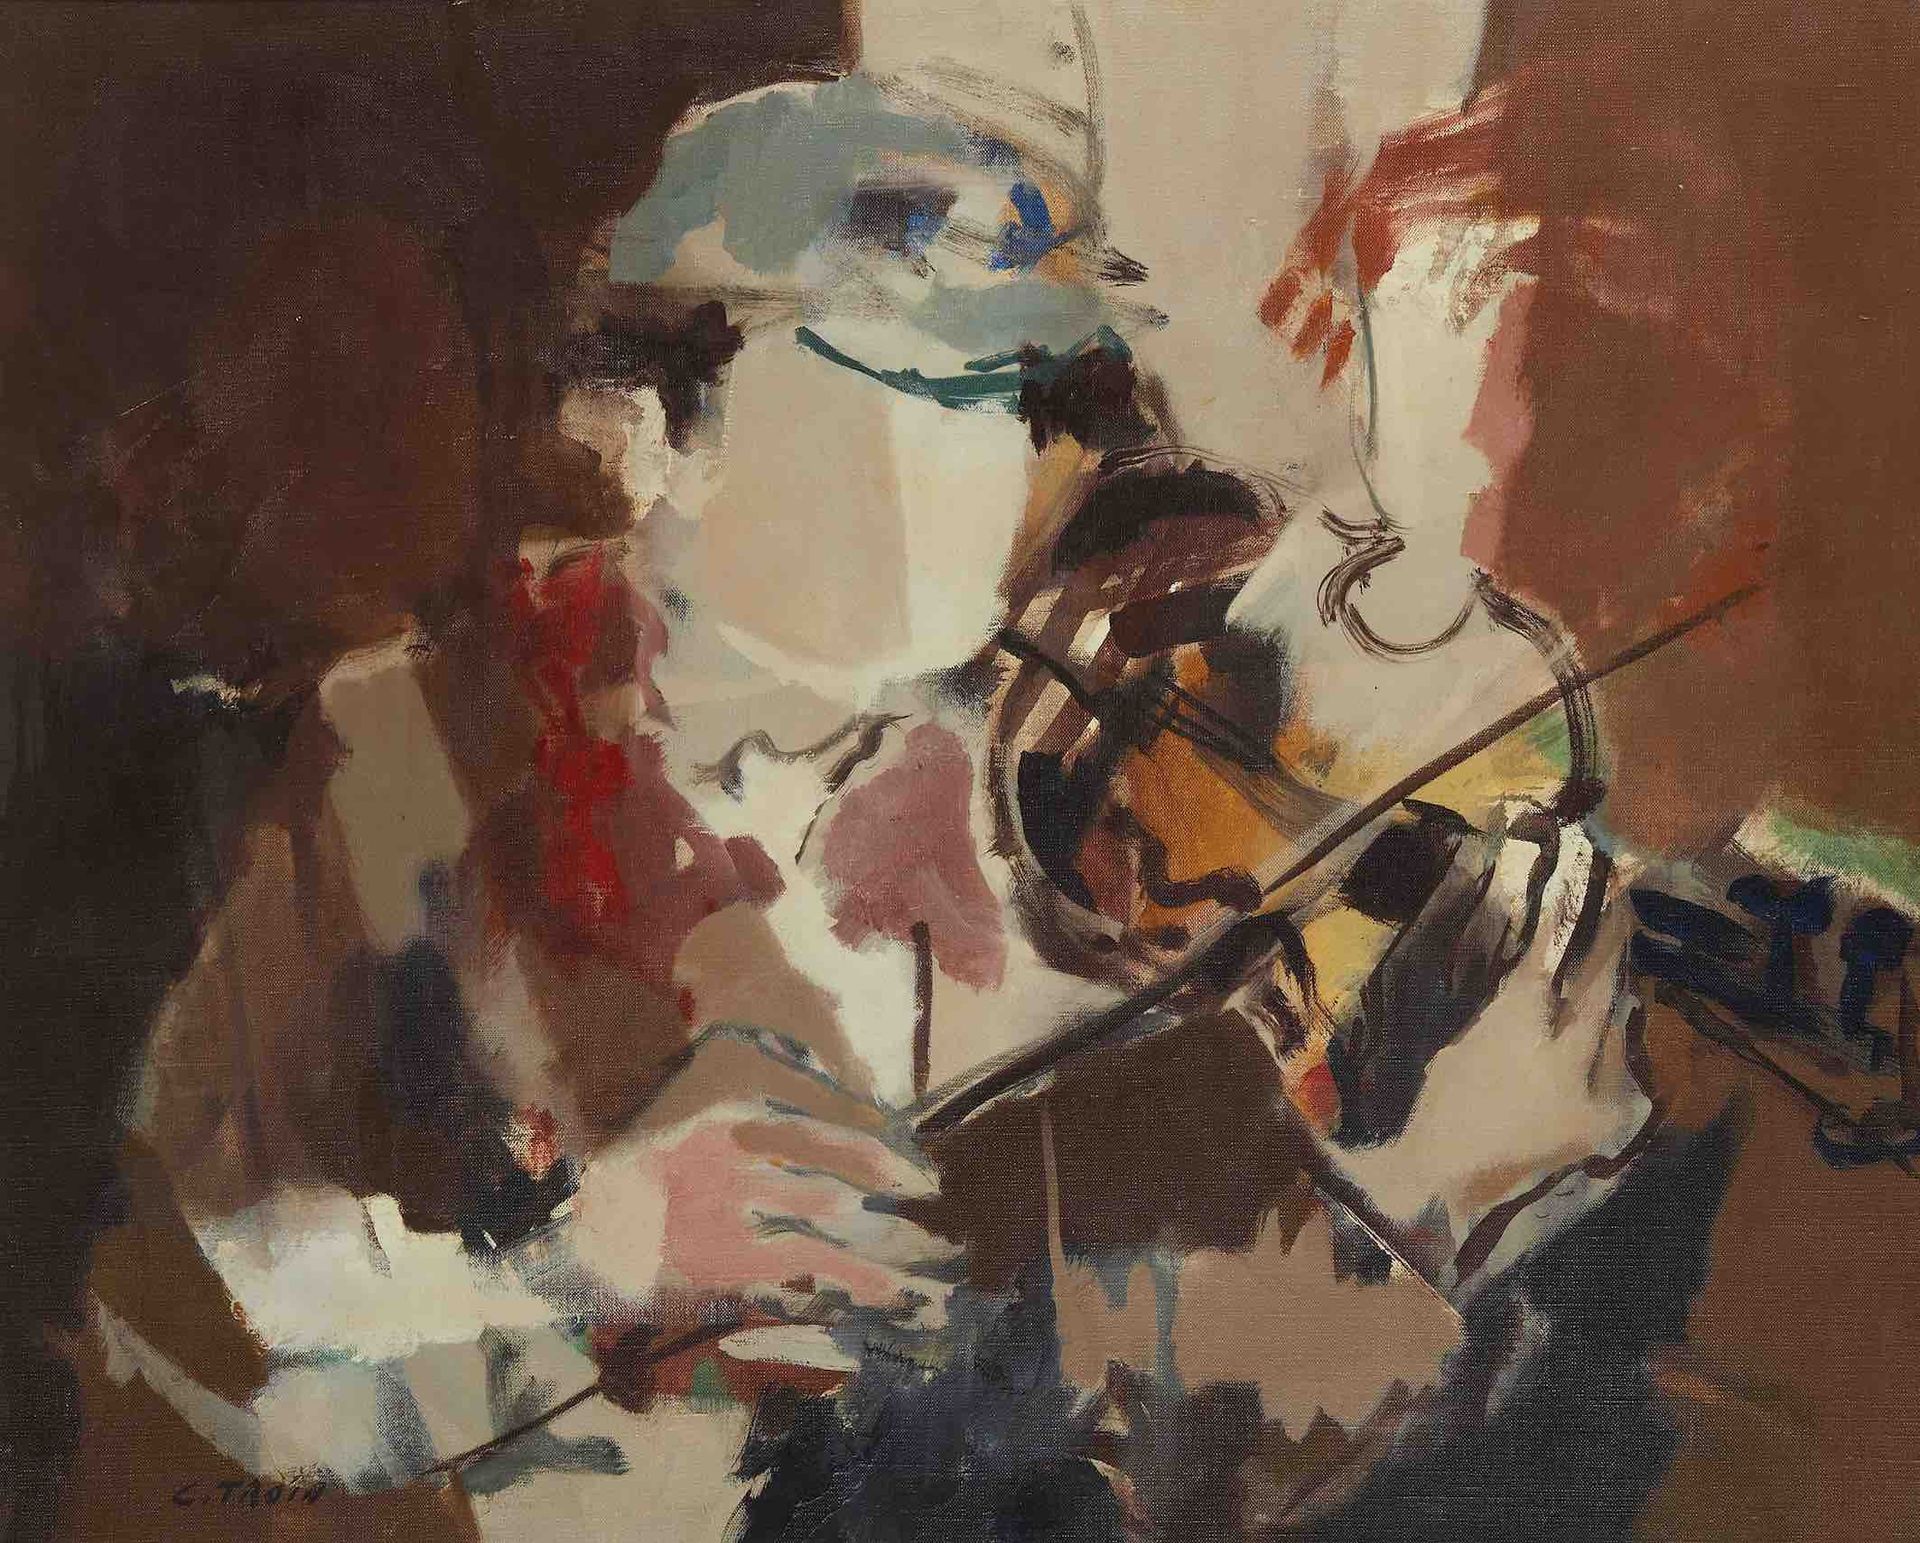 Null C.TROIN（20世纪）

小提琴家

布面油画，右下角有签名

尺寸：65 x 82 cm